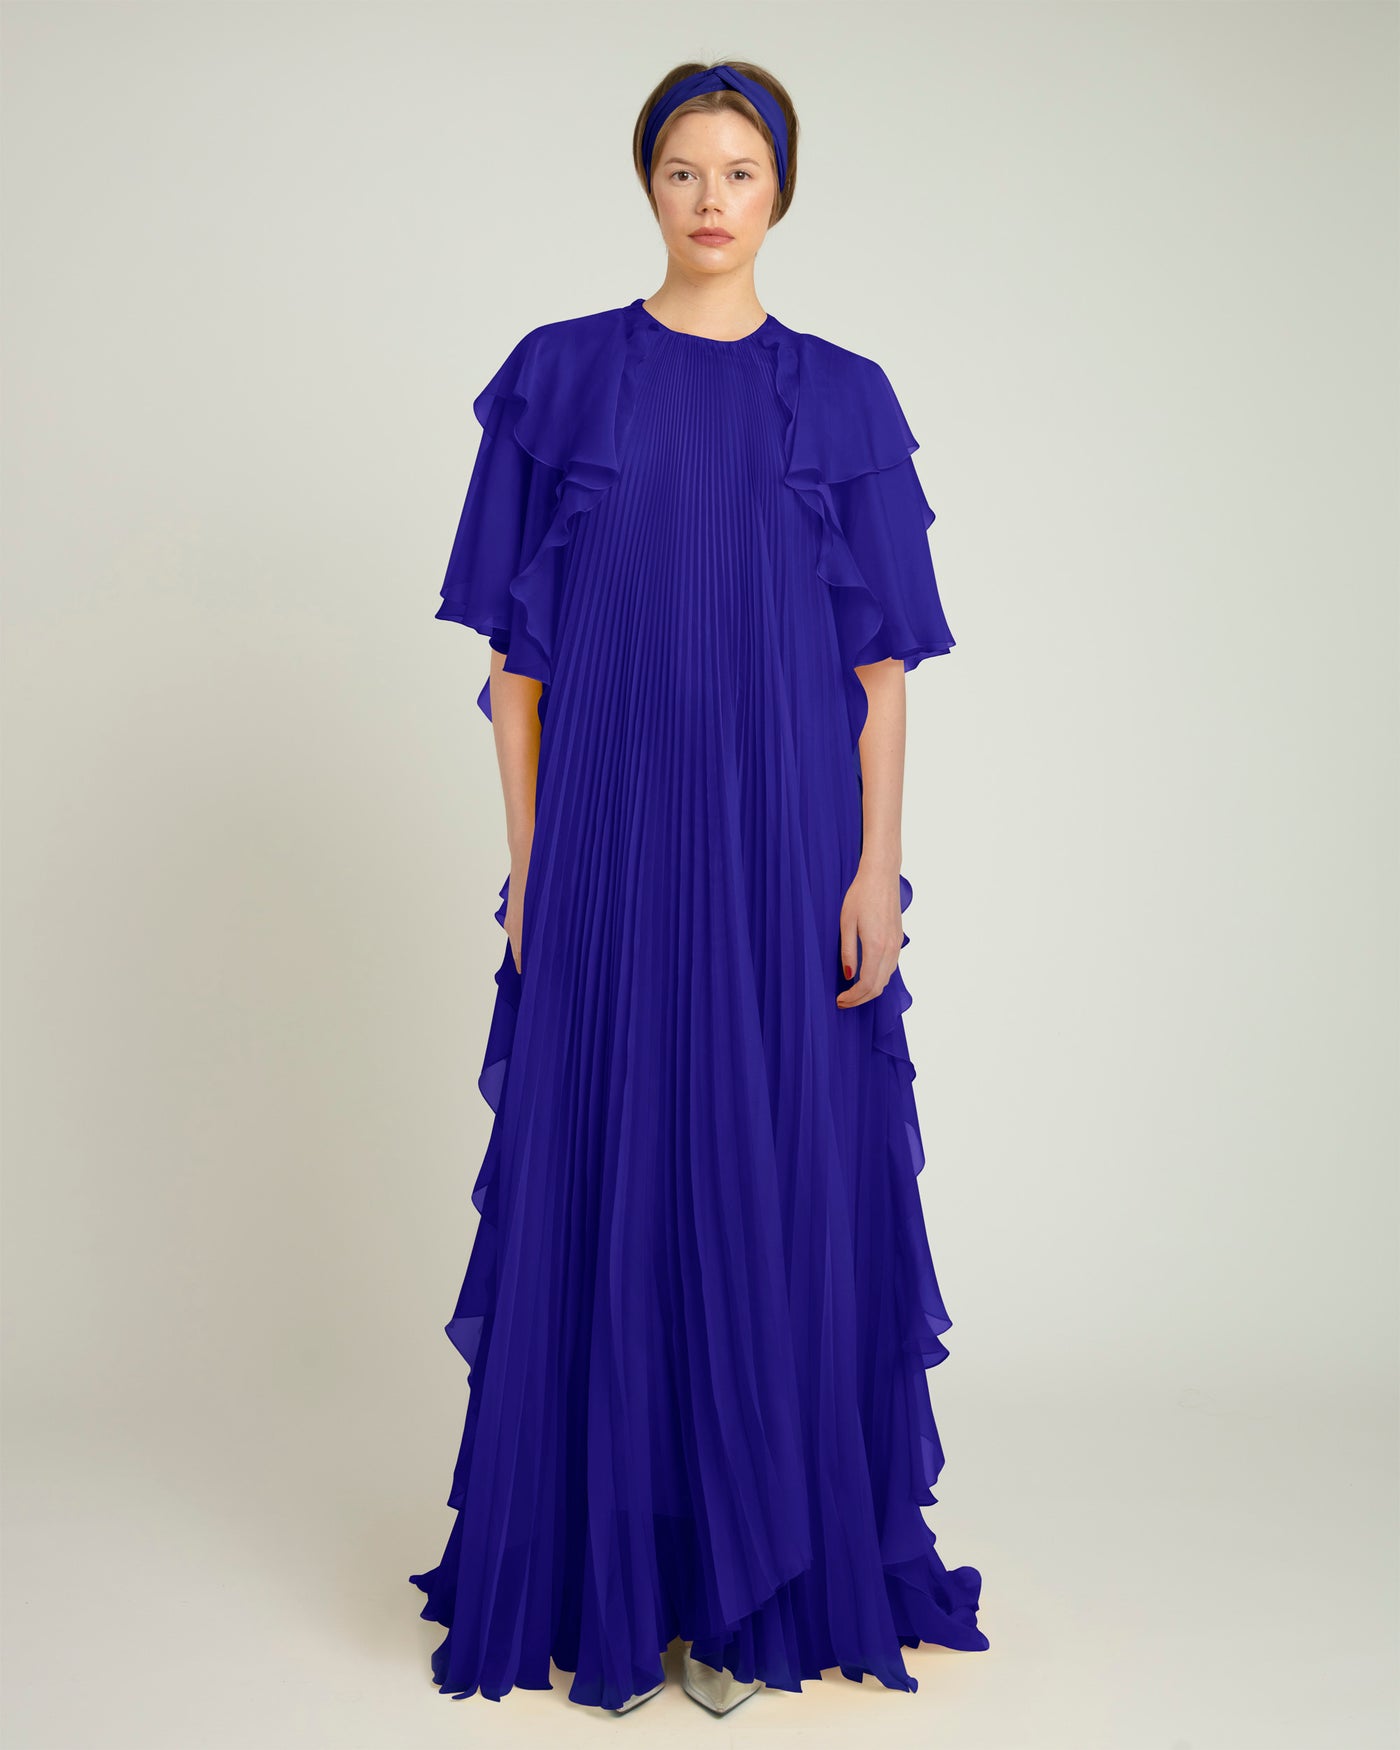 Pleated Royal Blue Dress